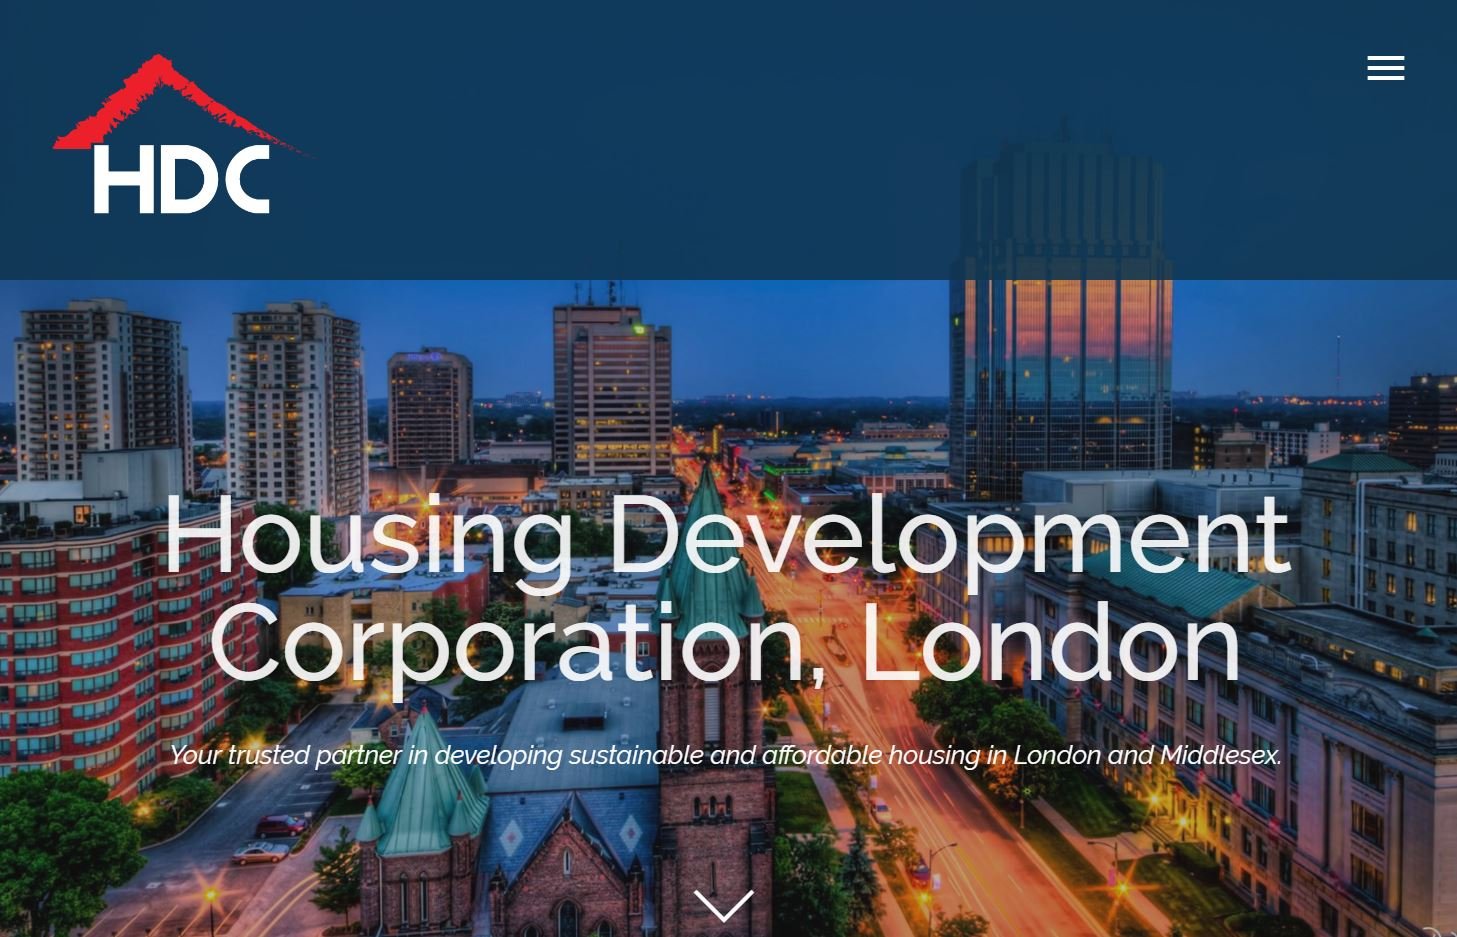 Housing Development Corporation, London